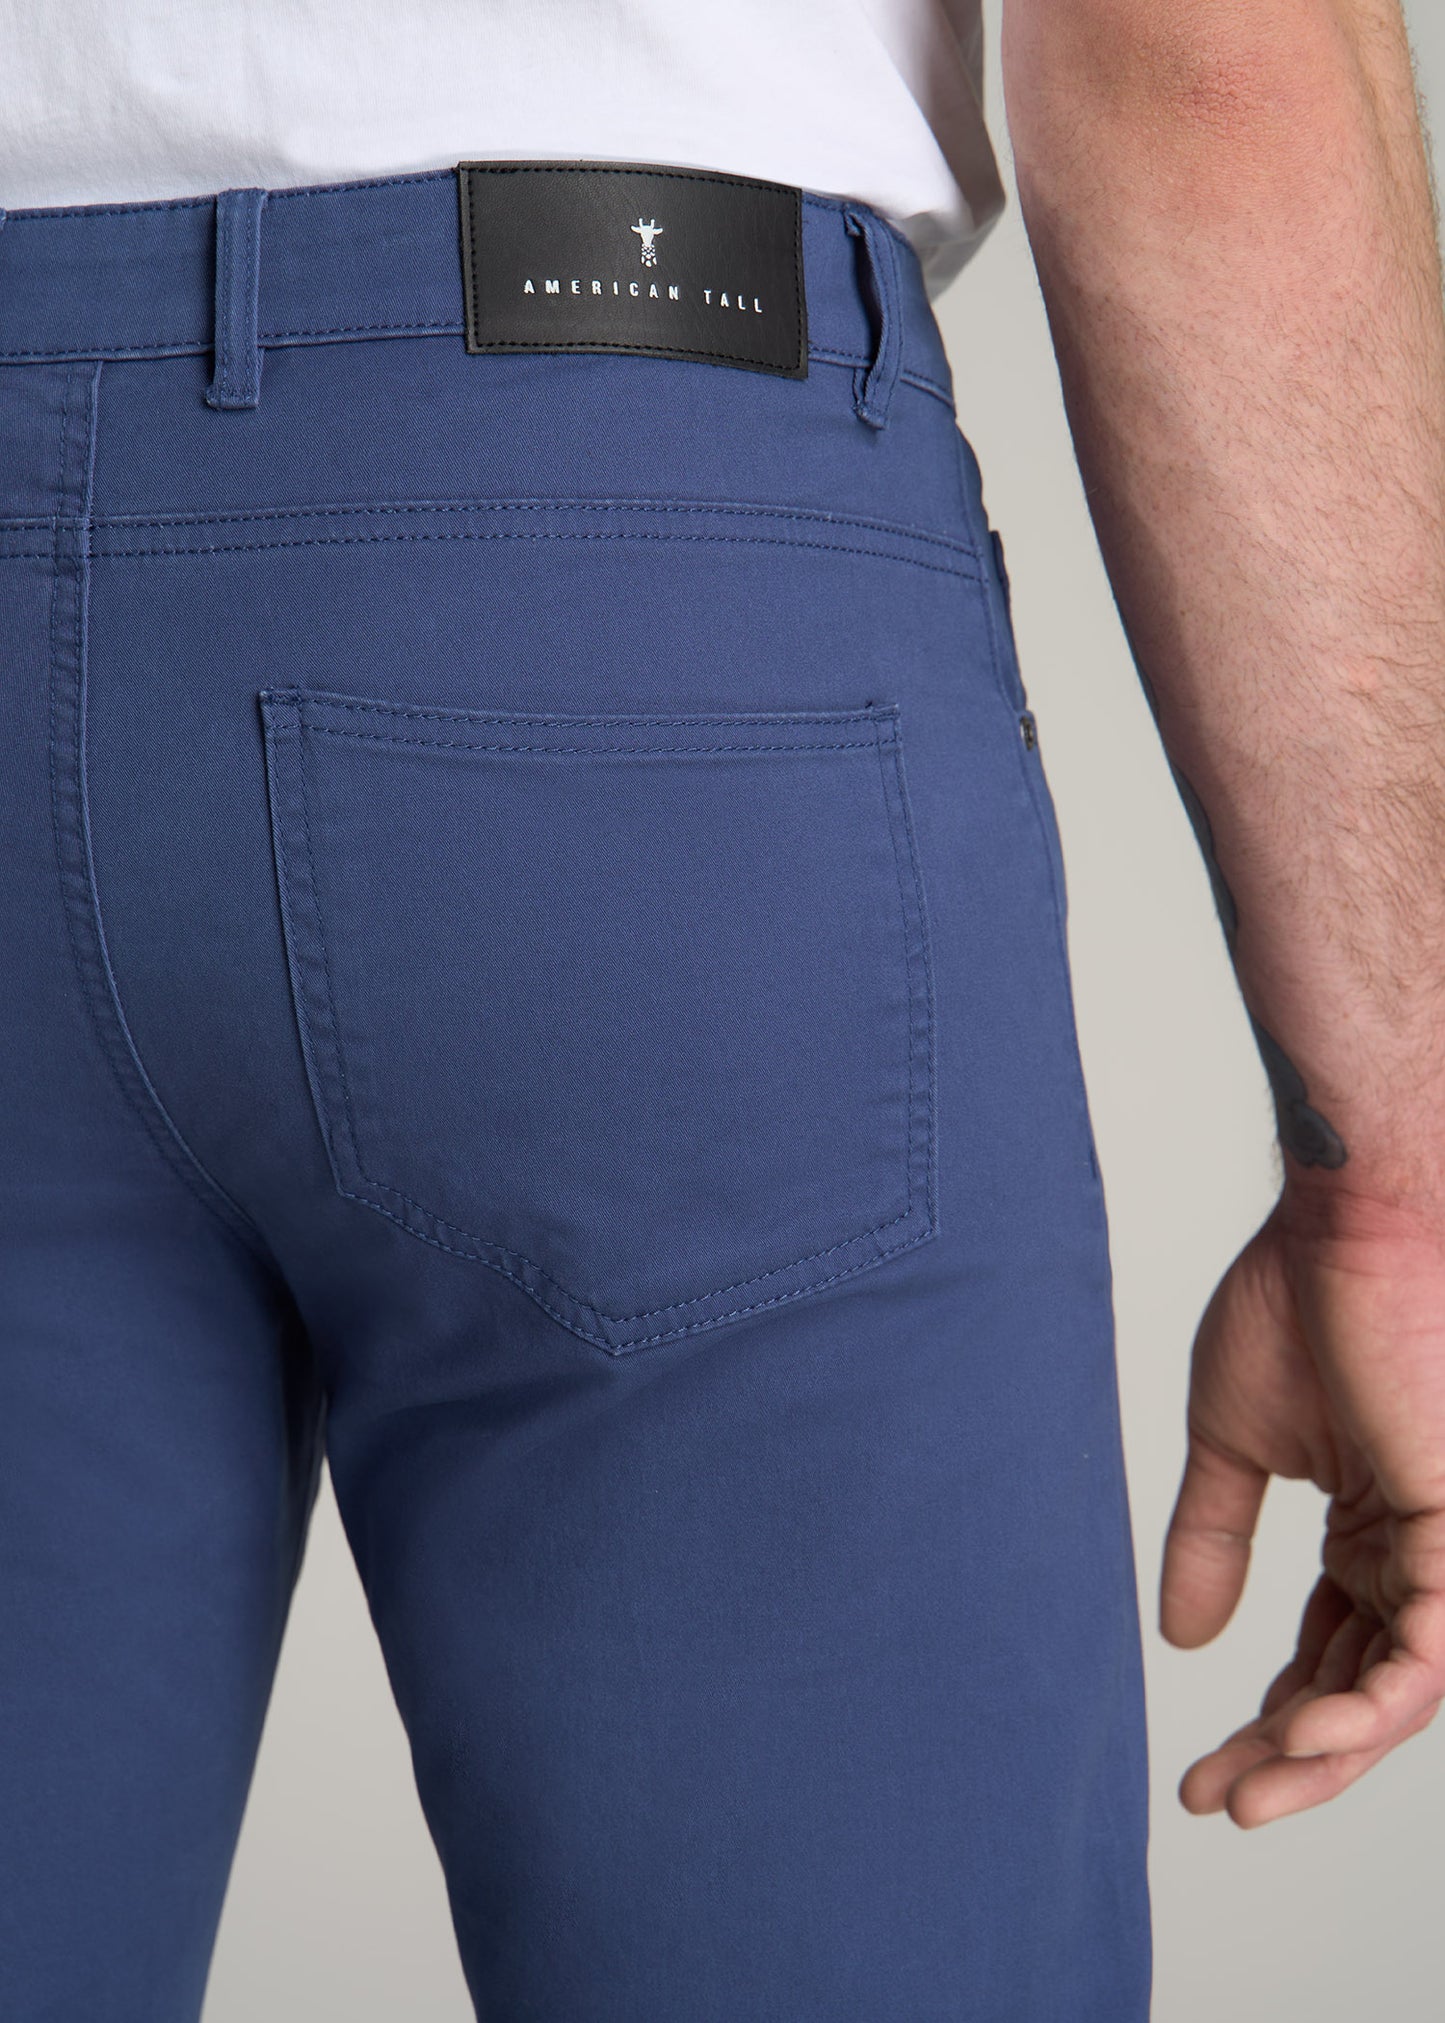 Dylan SLIM FIT Five-Pocket Pants in Steel Blue - Pants for Tall Men